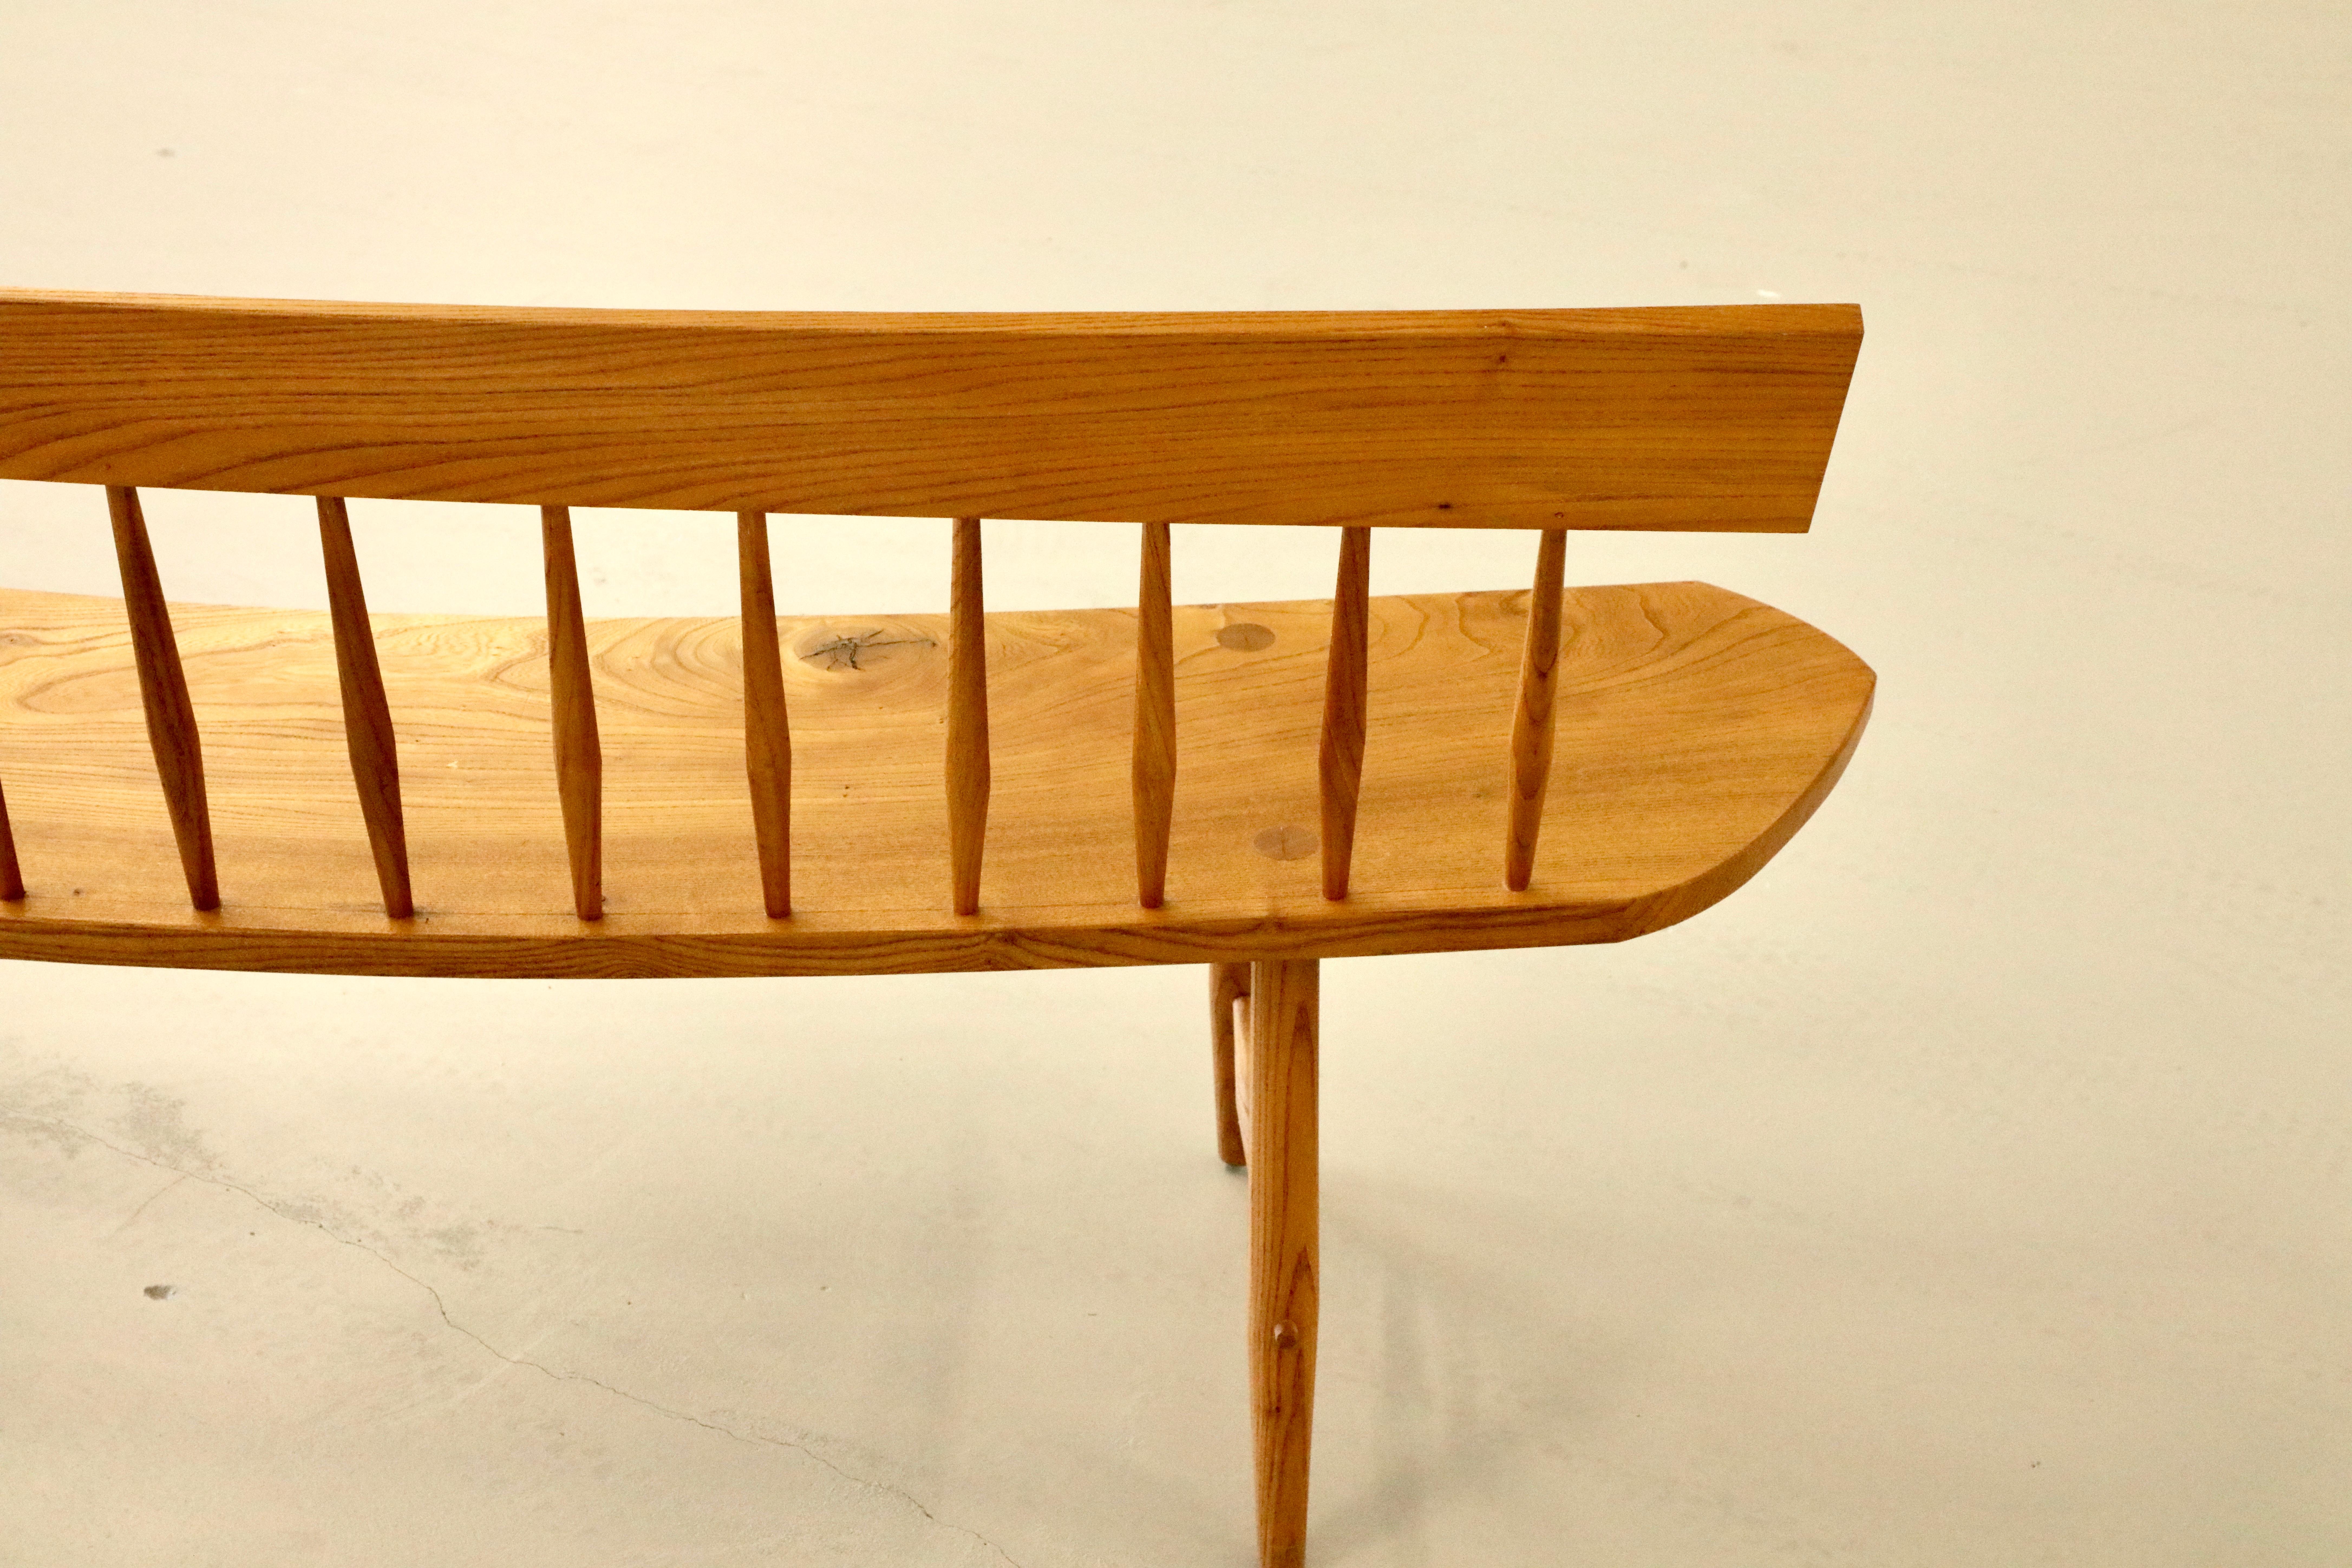 Wood American Craft Bench